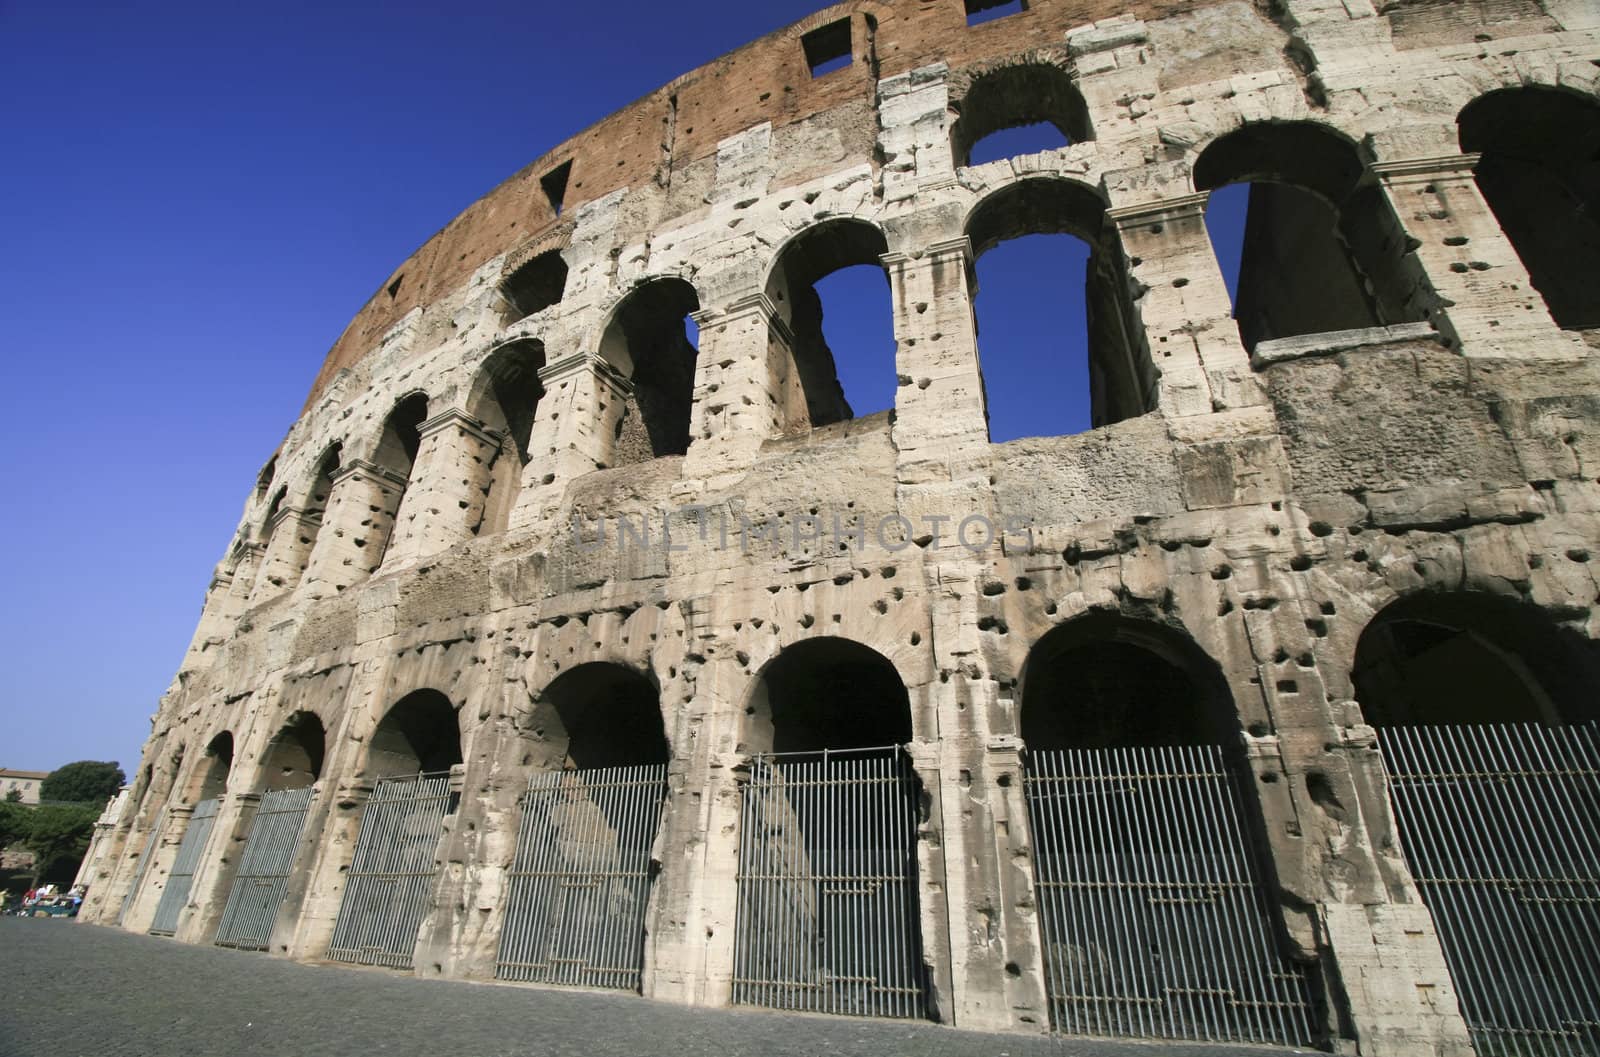 The famous international landmark is an Italian highlight